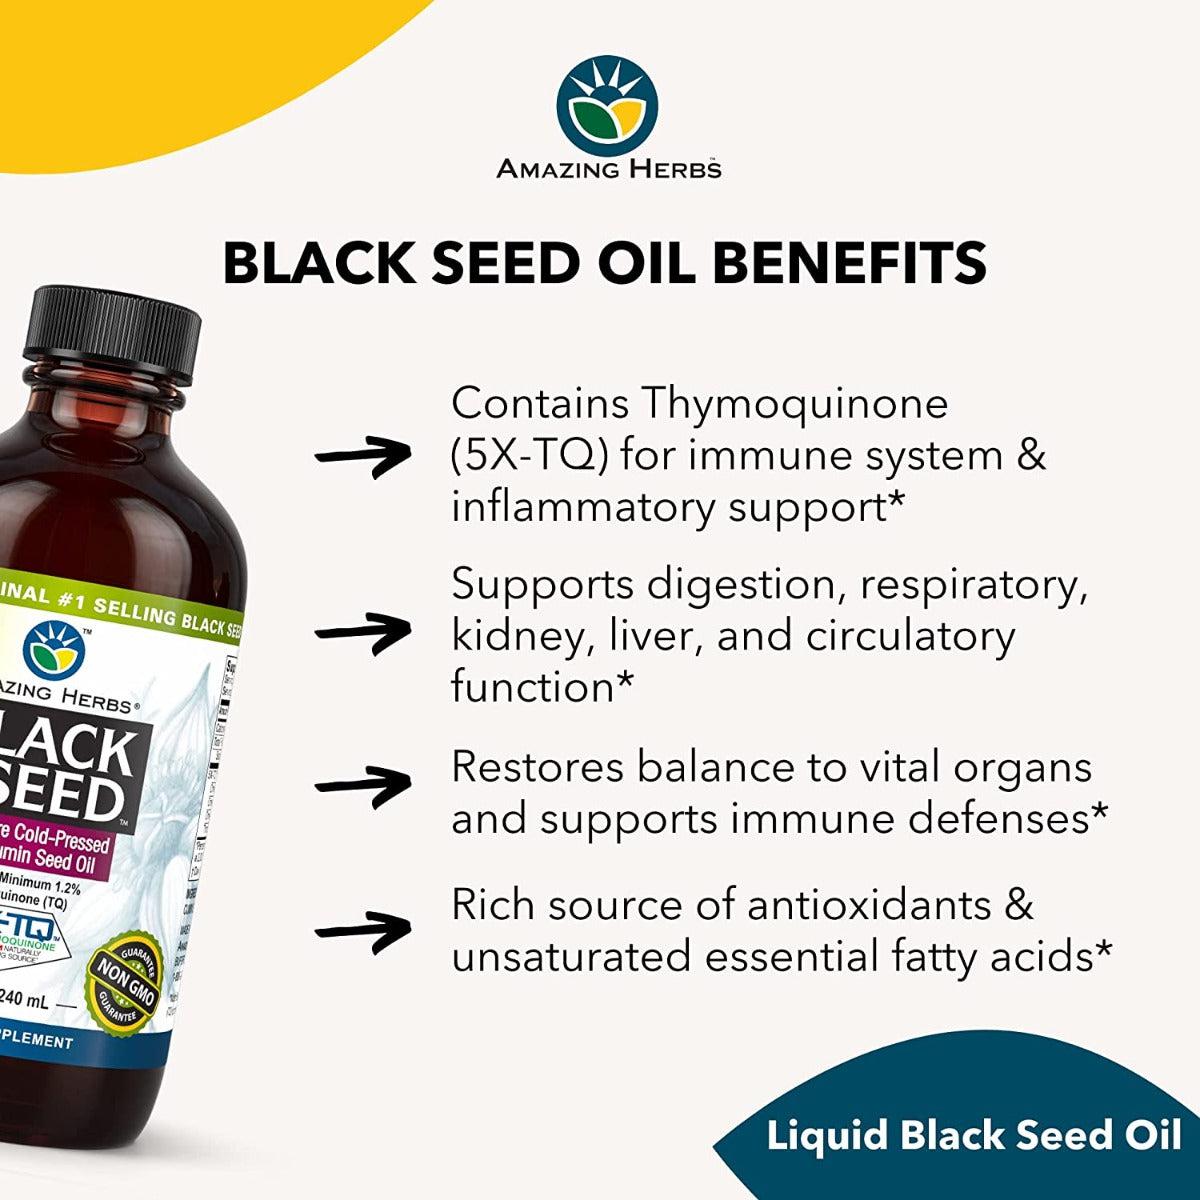 Amazing Herbs Premium Black Seed Cumin Seed Oil 100% Pure Cold Pressed Nigella Sativa 240ml